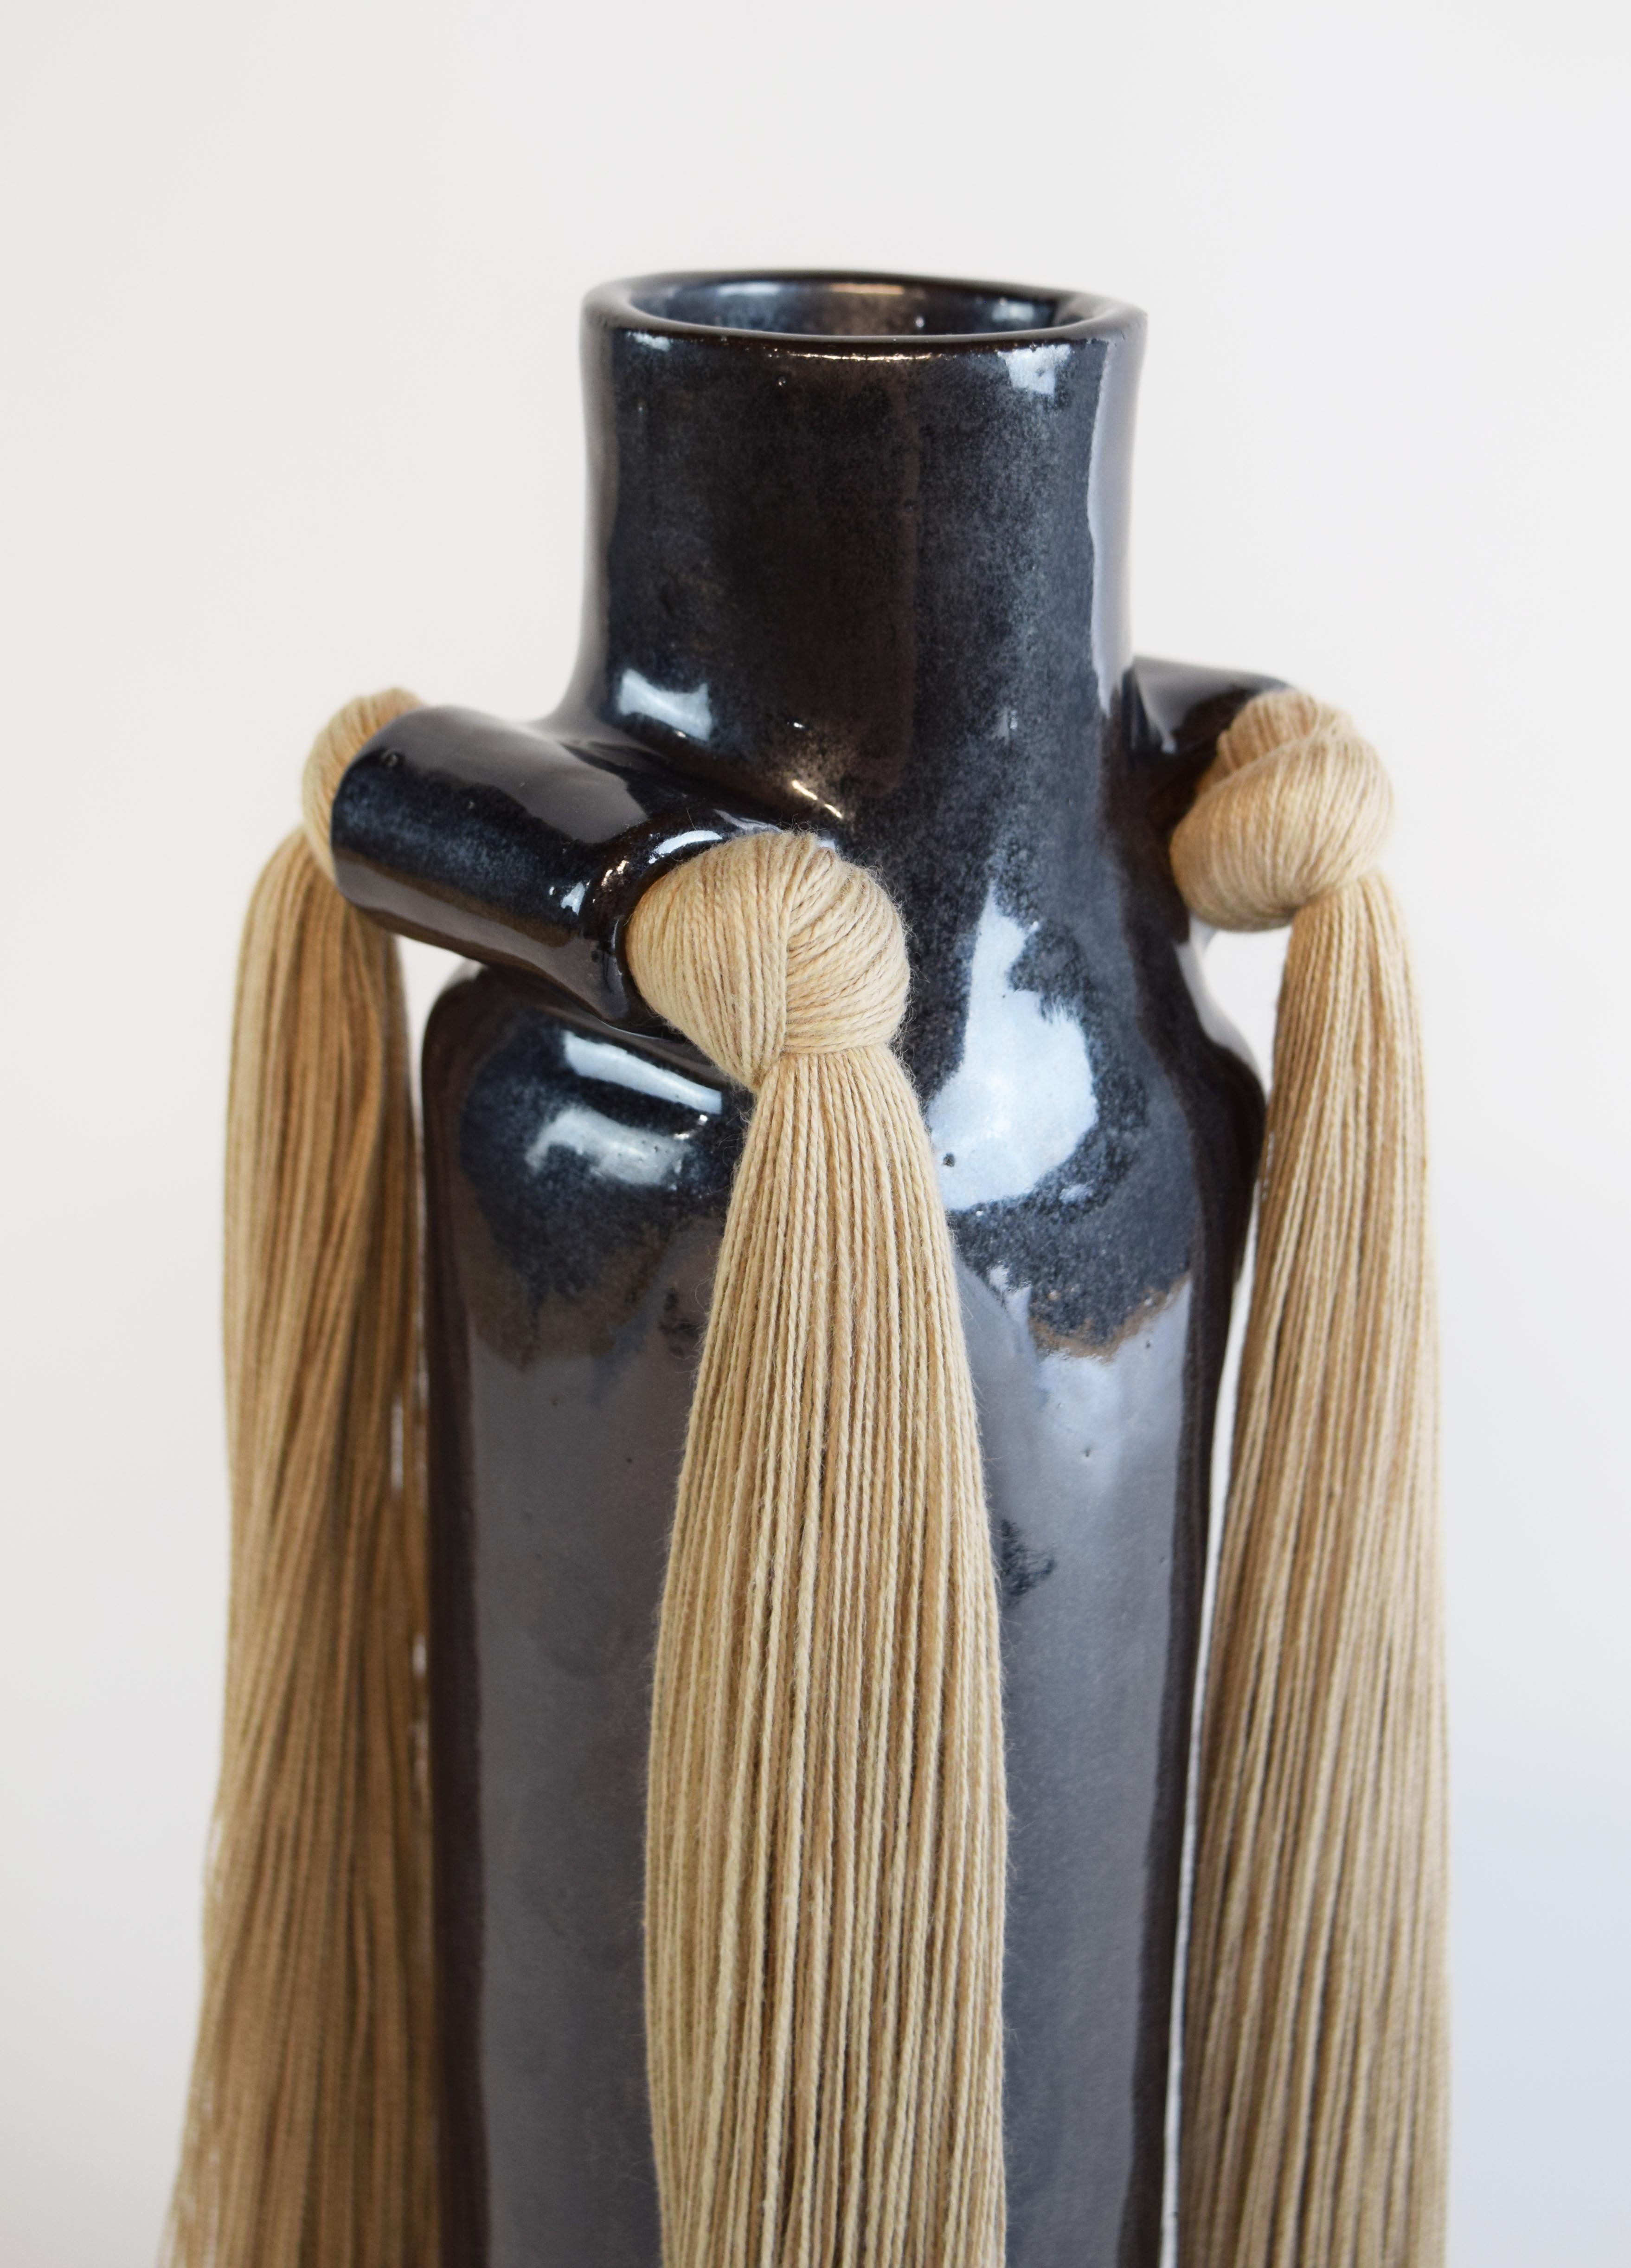 Hand-Crafted Handmade Ceramic Vase #703 in Black Glaze with Beige Cotton Fringe Detail For Sale